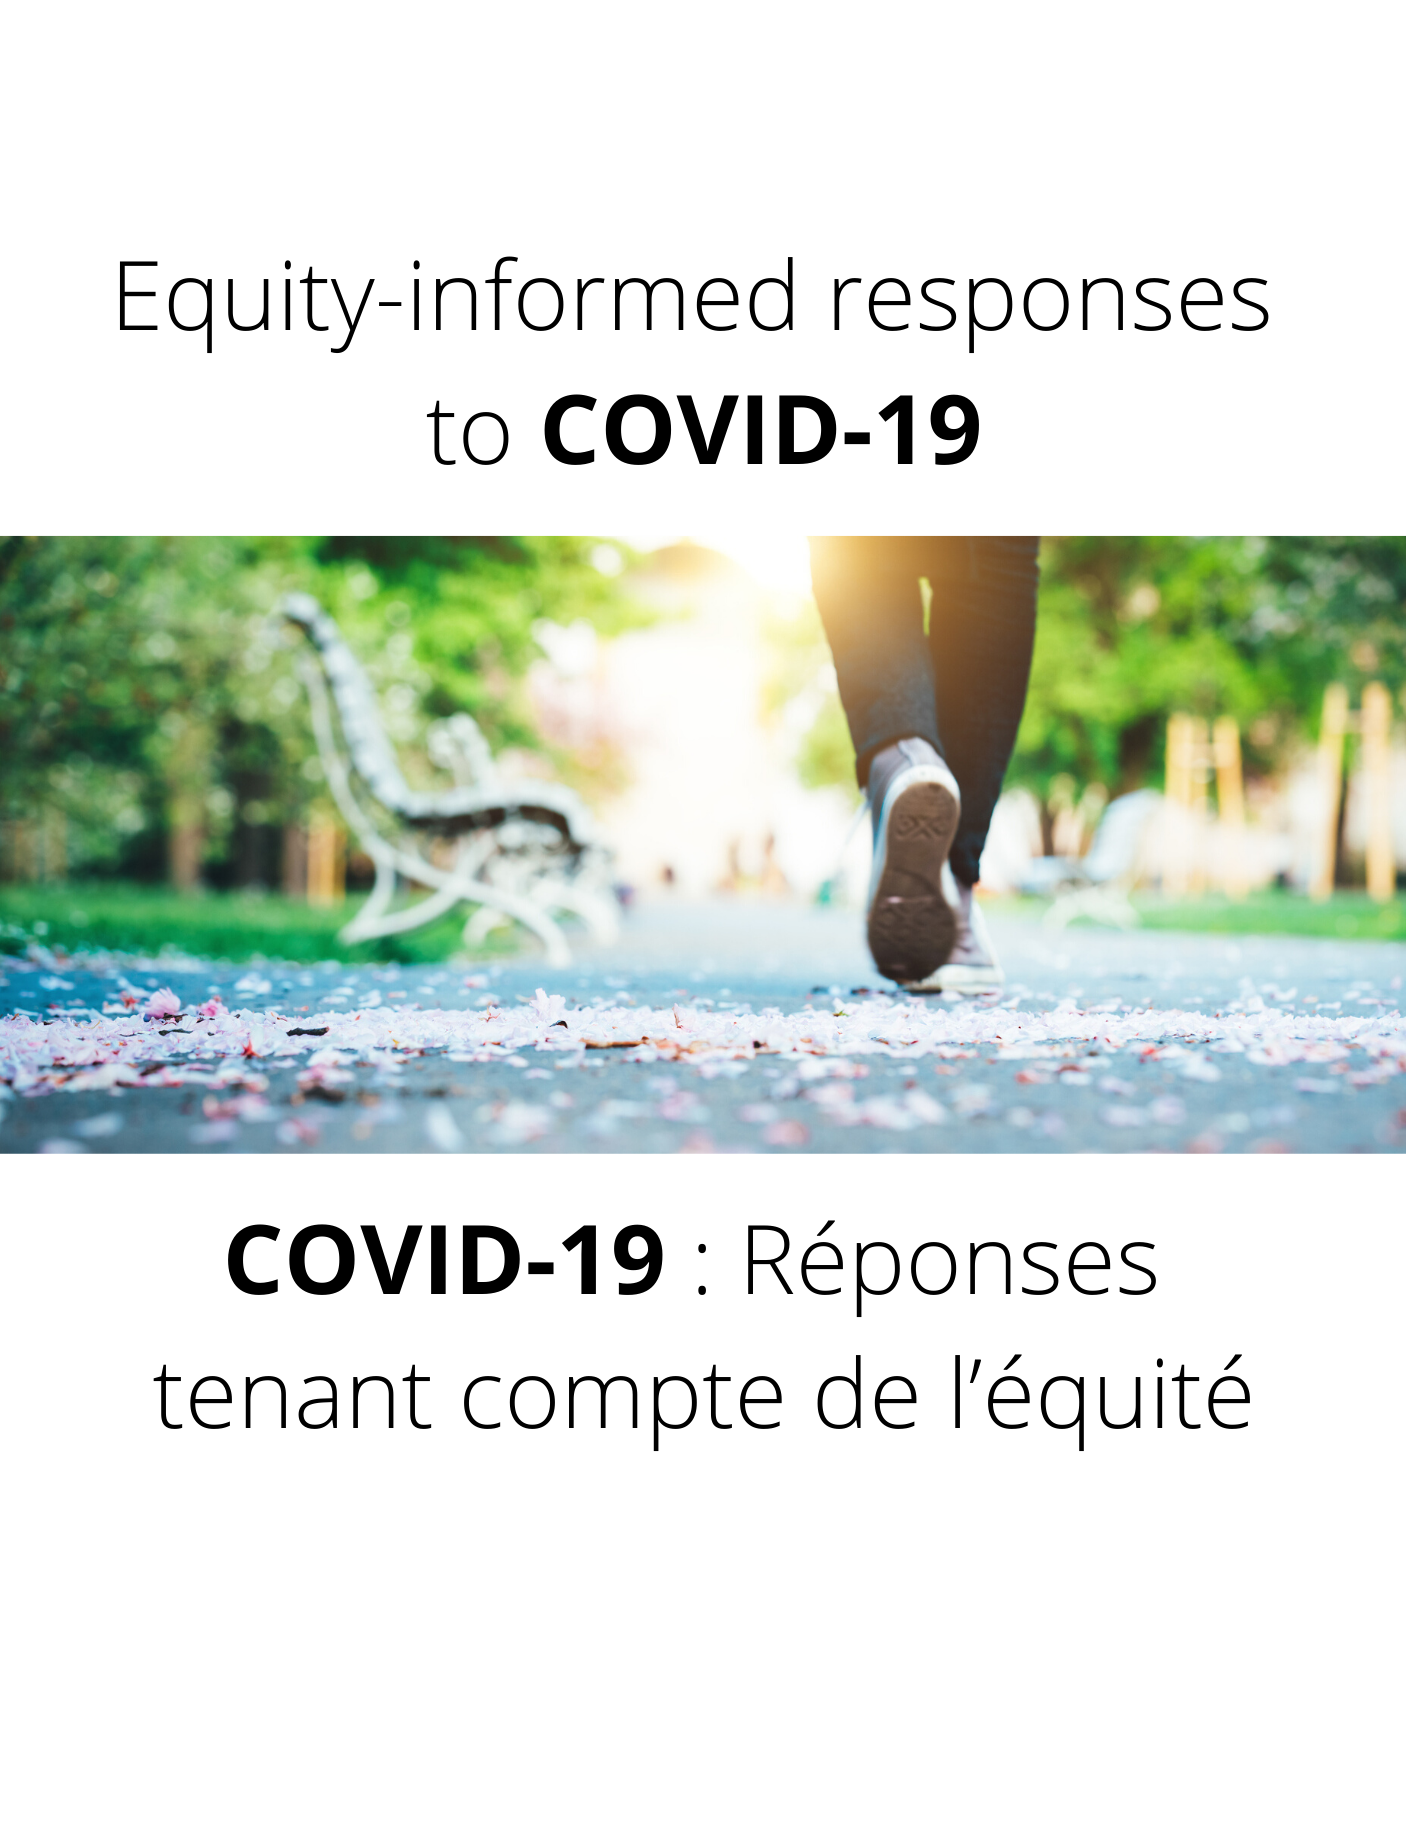 Coronavirus disease (COVID-19): Vulnerable populations and COVID-19